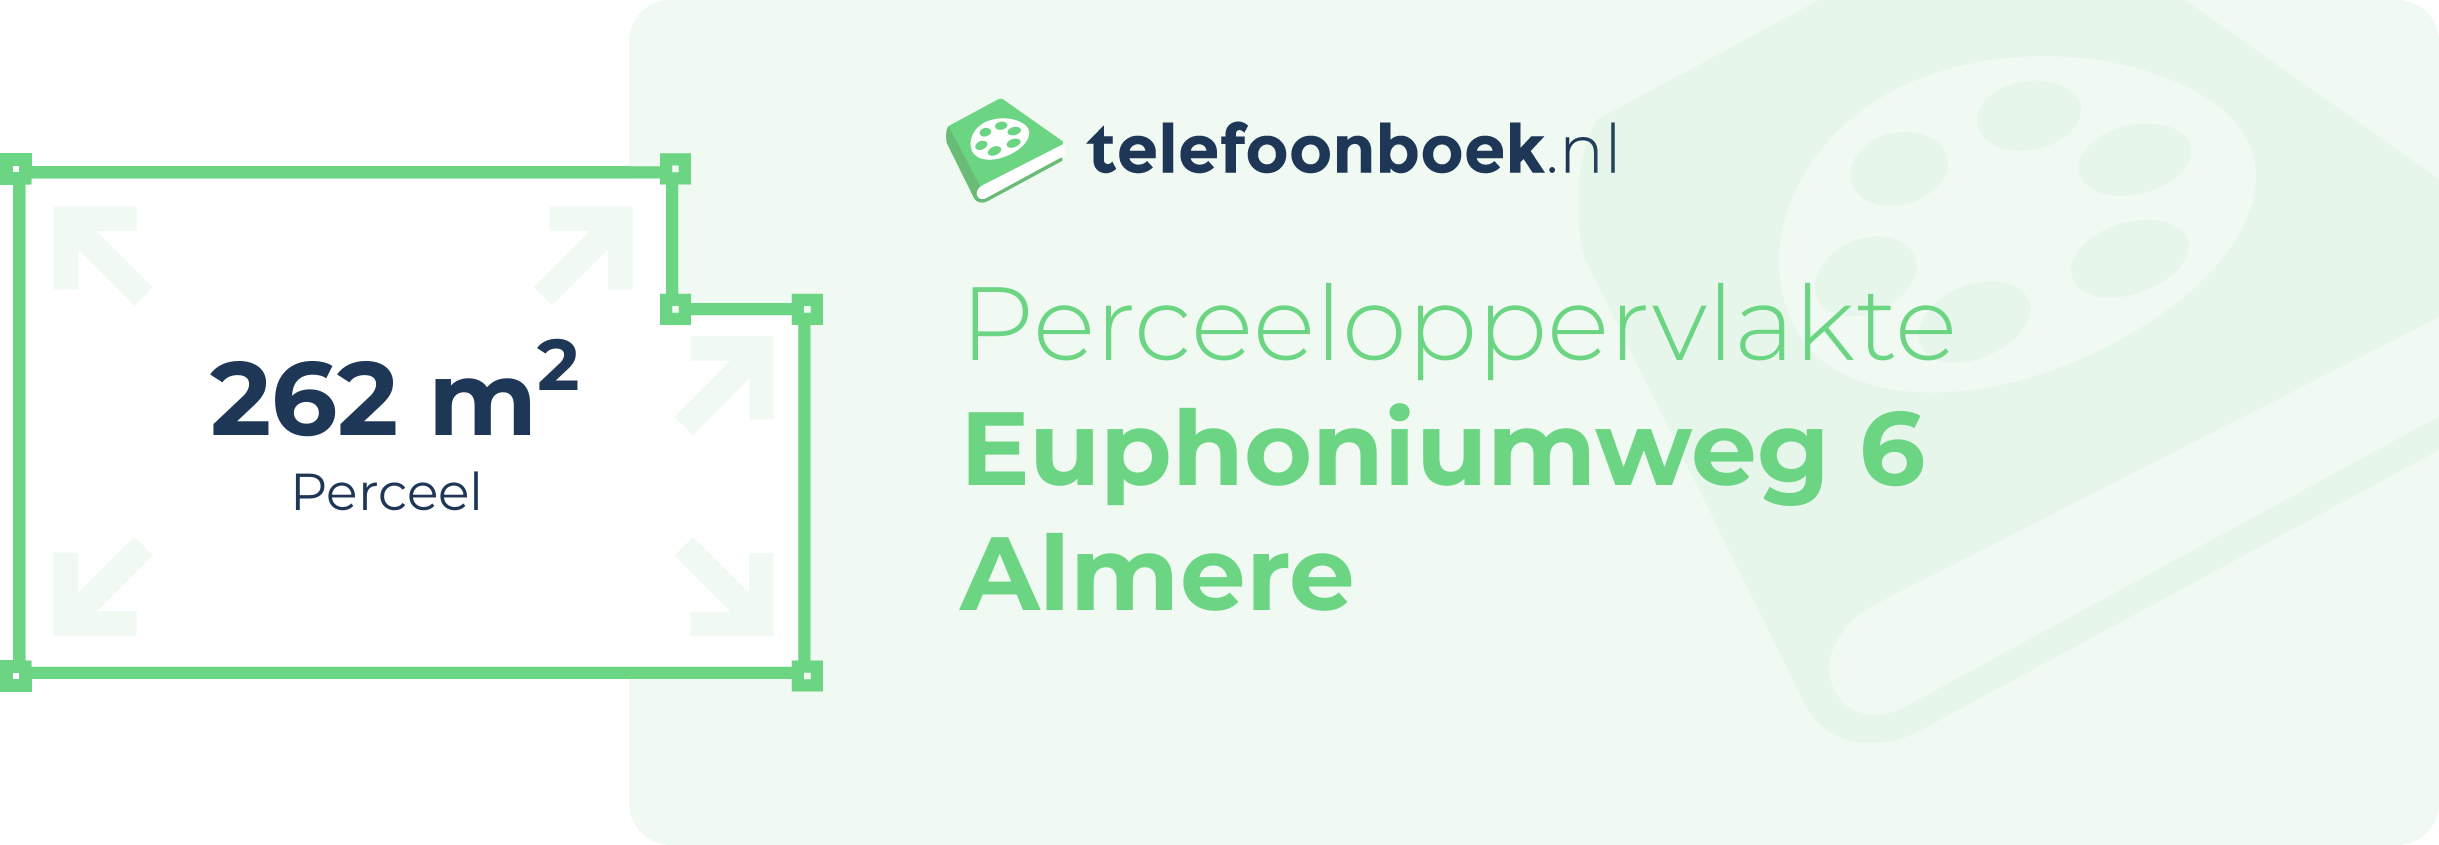 Perceeloppervlakte Euphoniumweg 6 Almere